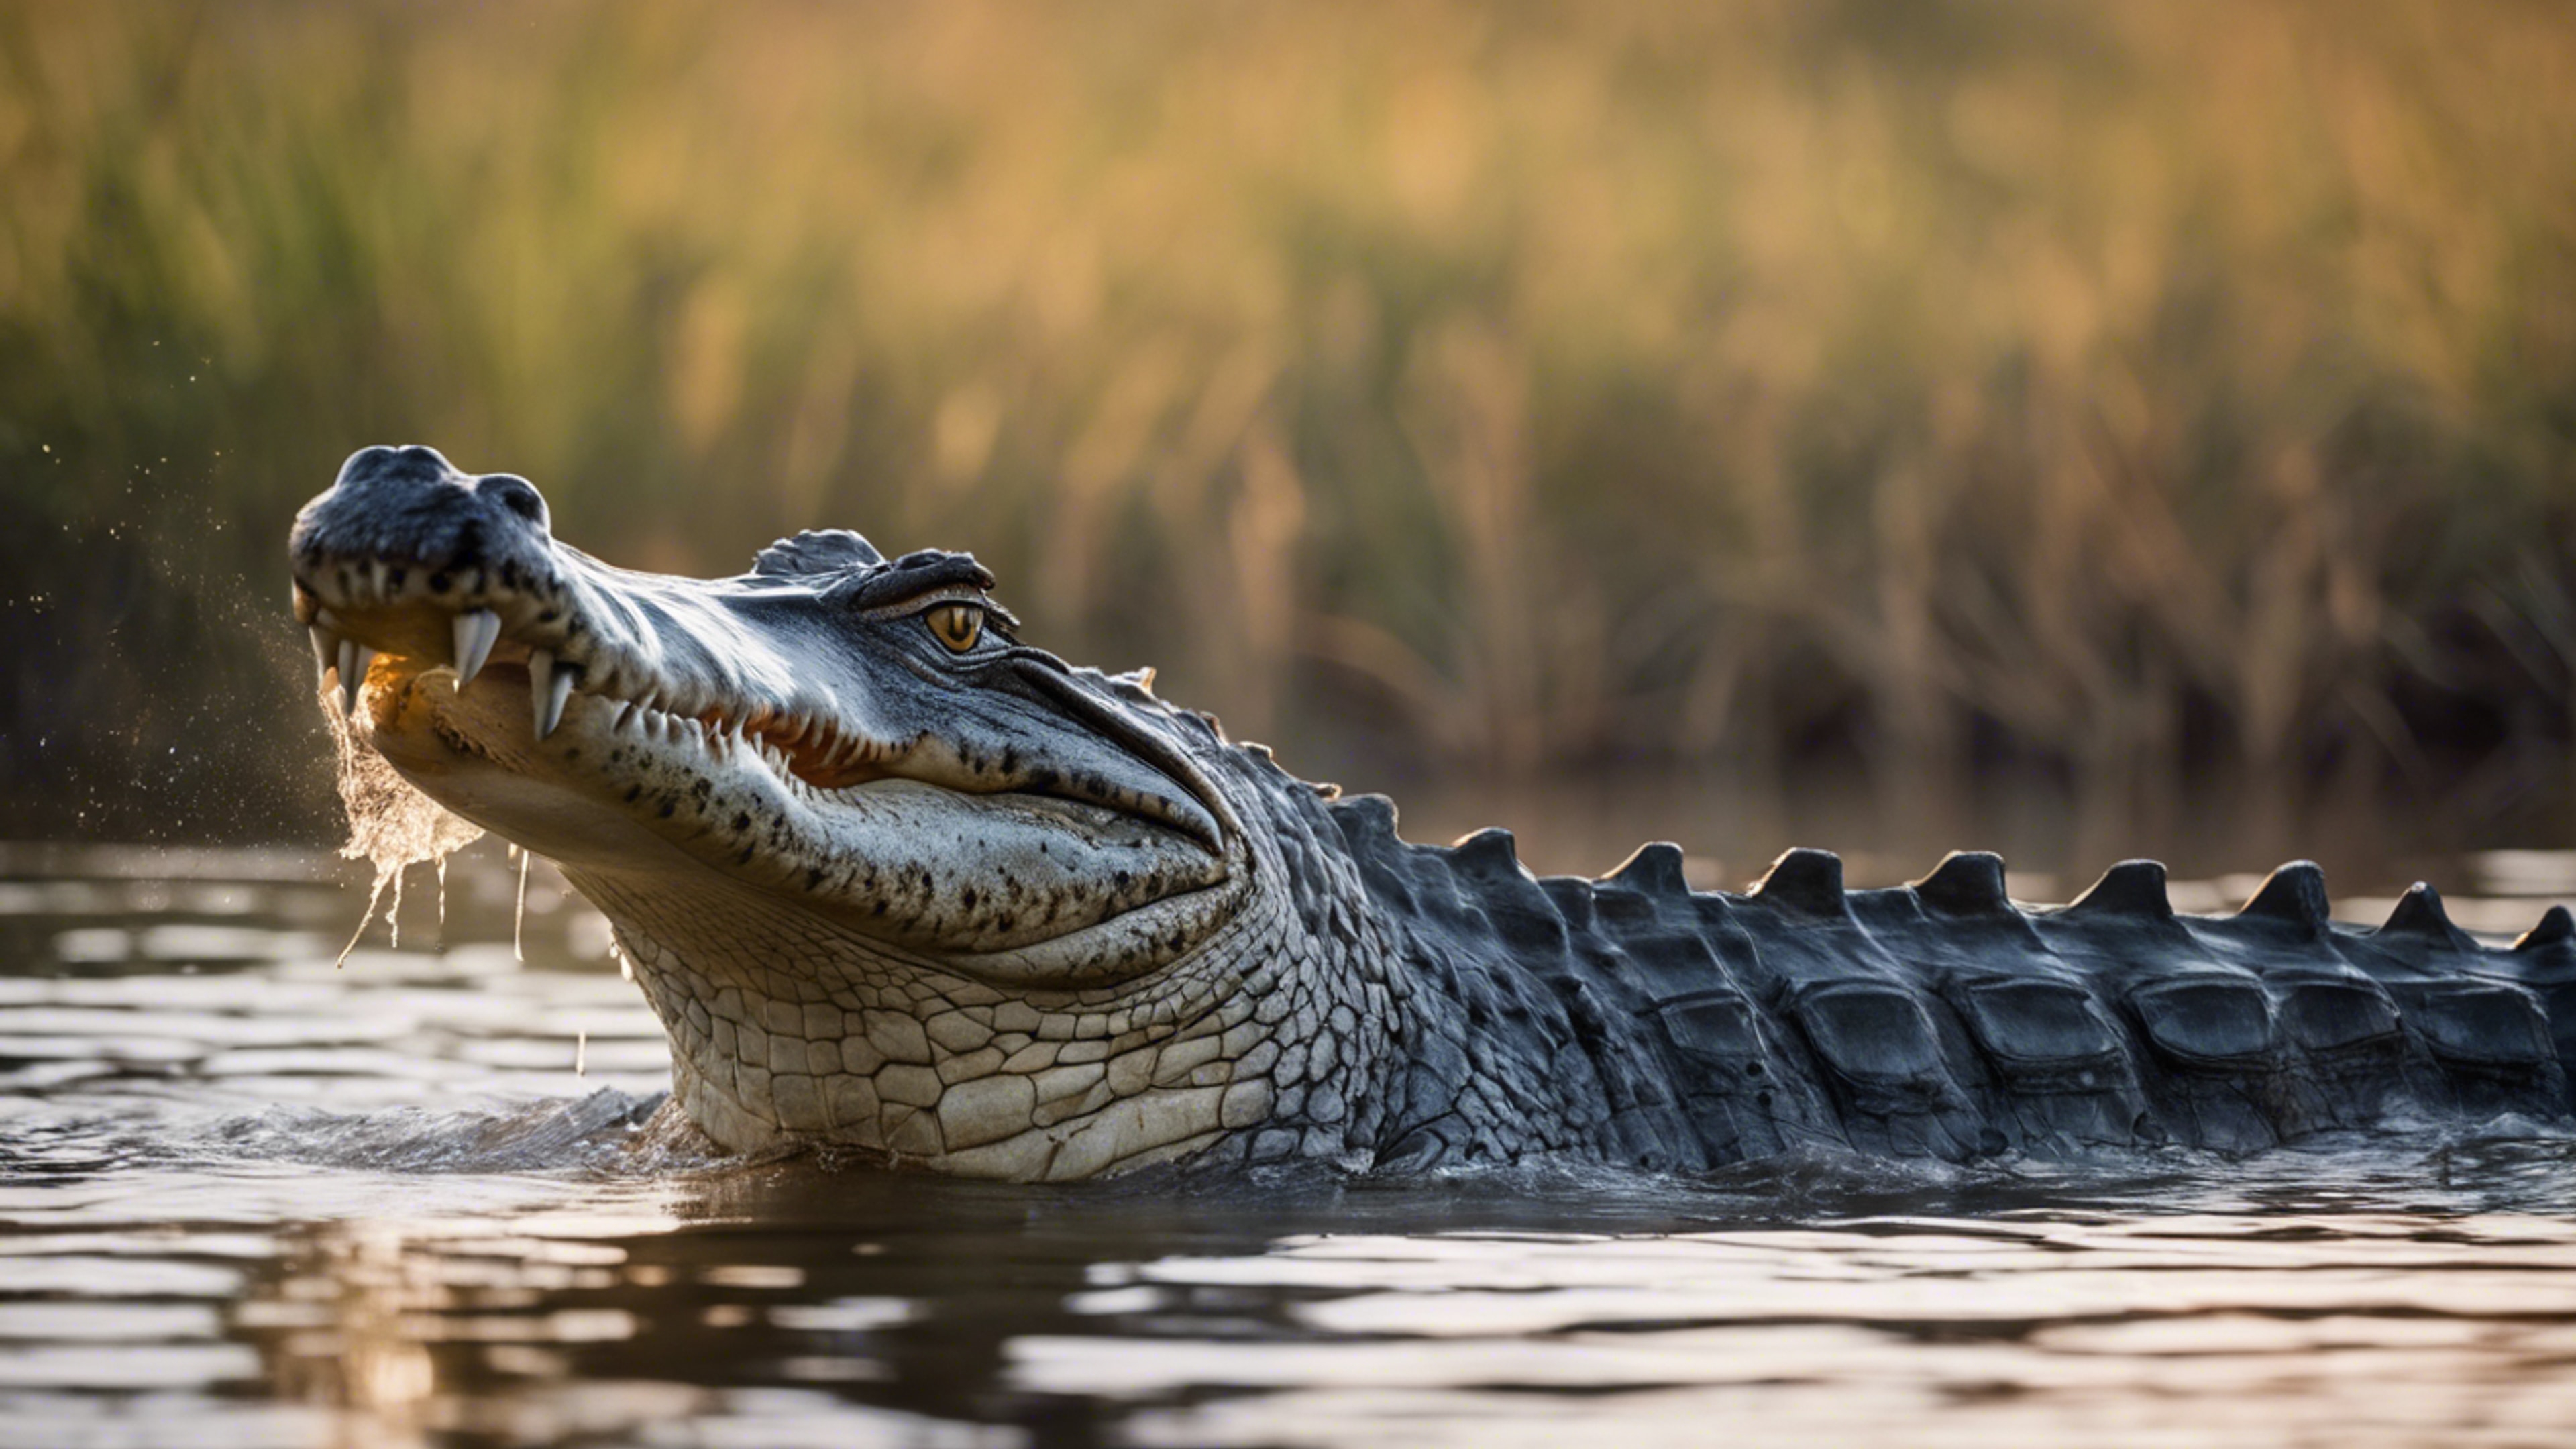 A glorious scene of a crocodile in the heart of the Okavango Delta. Обои[926204686e5b483ca4a6]